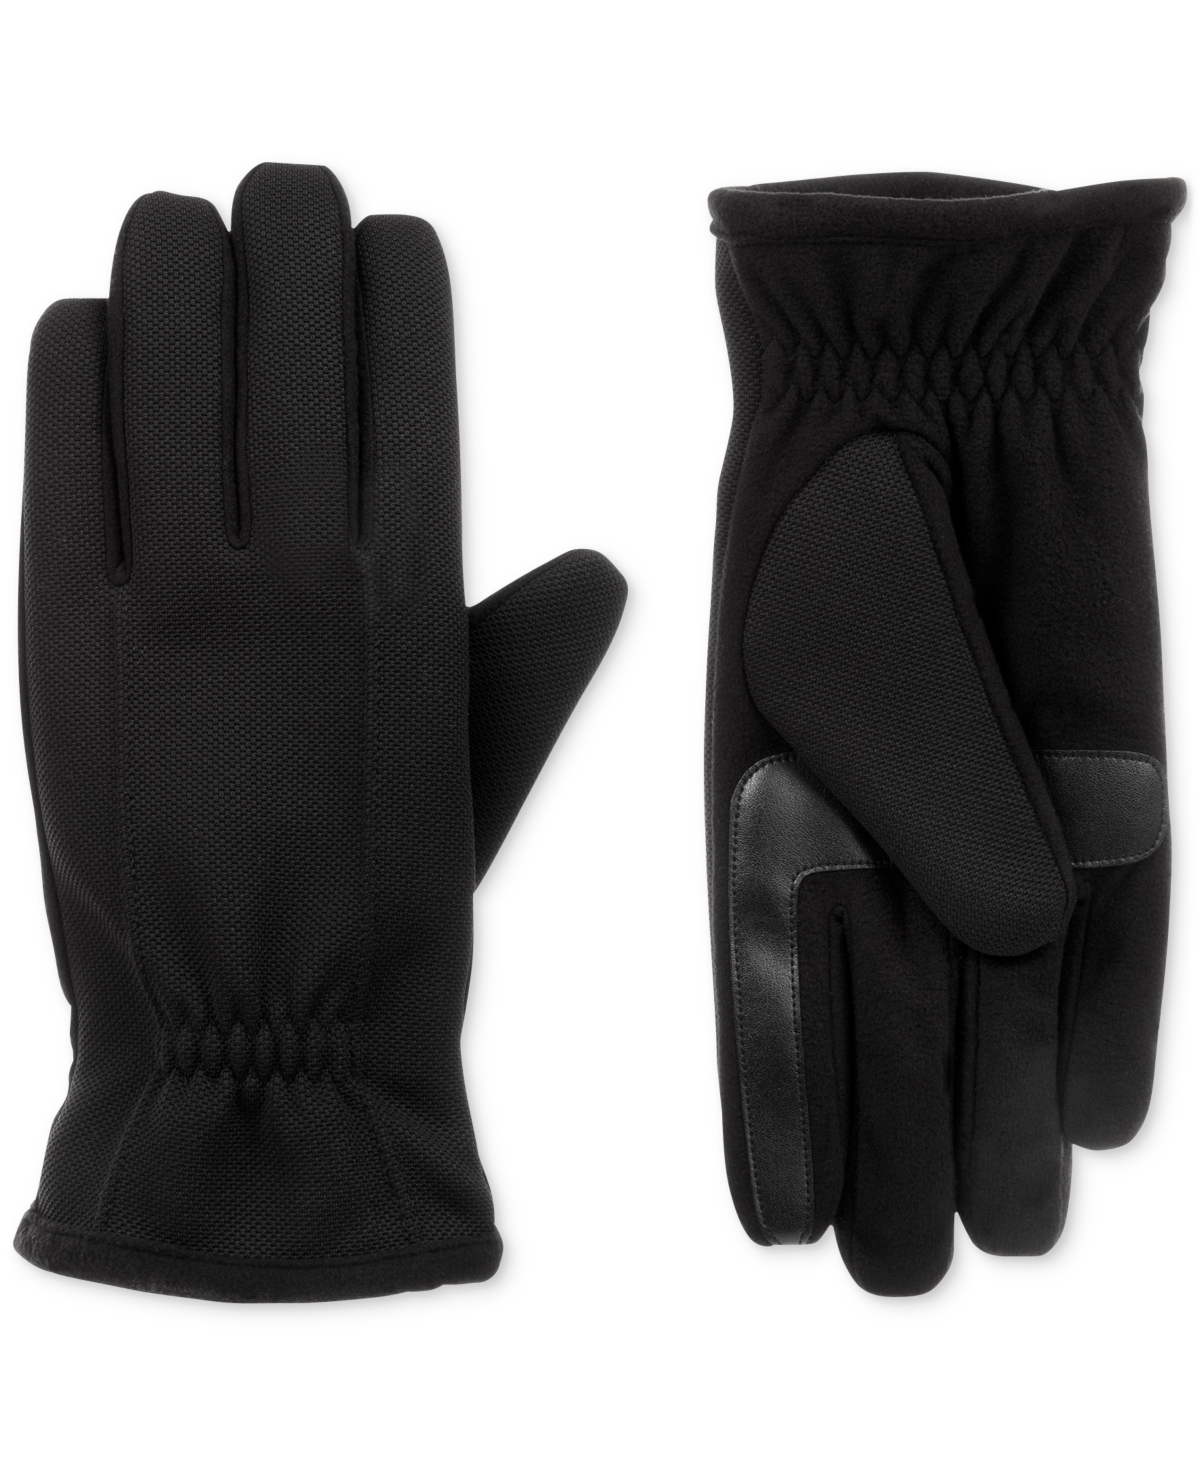 Men's Tech Stretch Gloves - Black